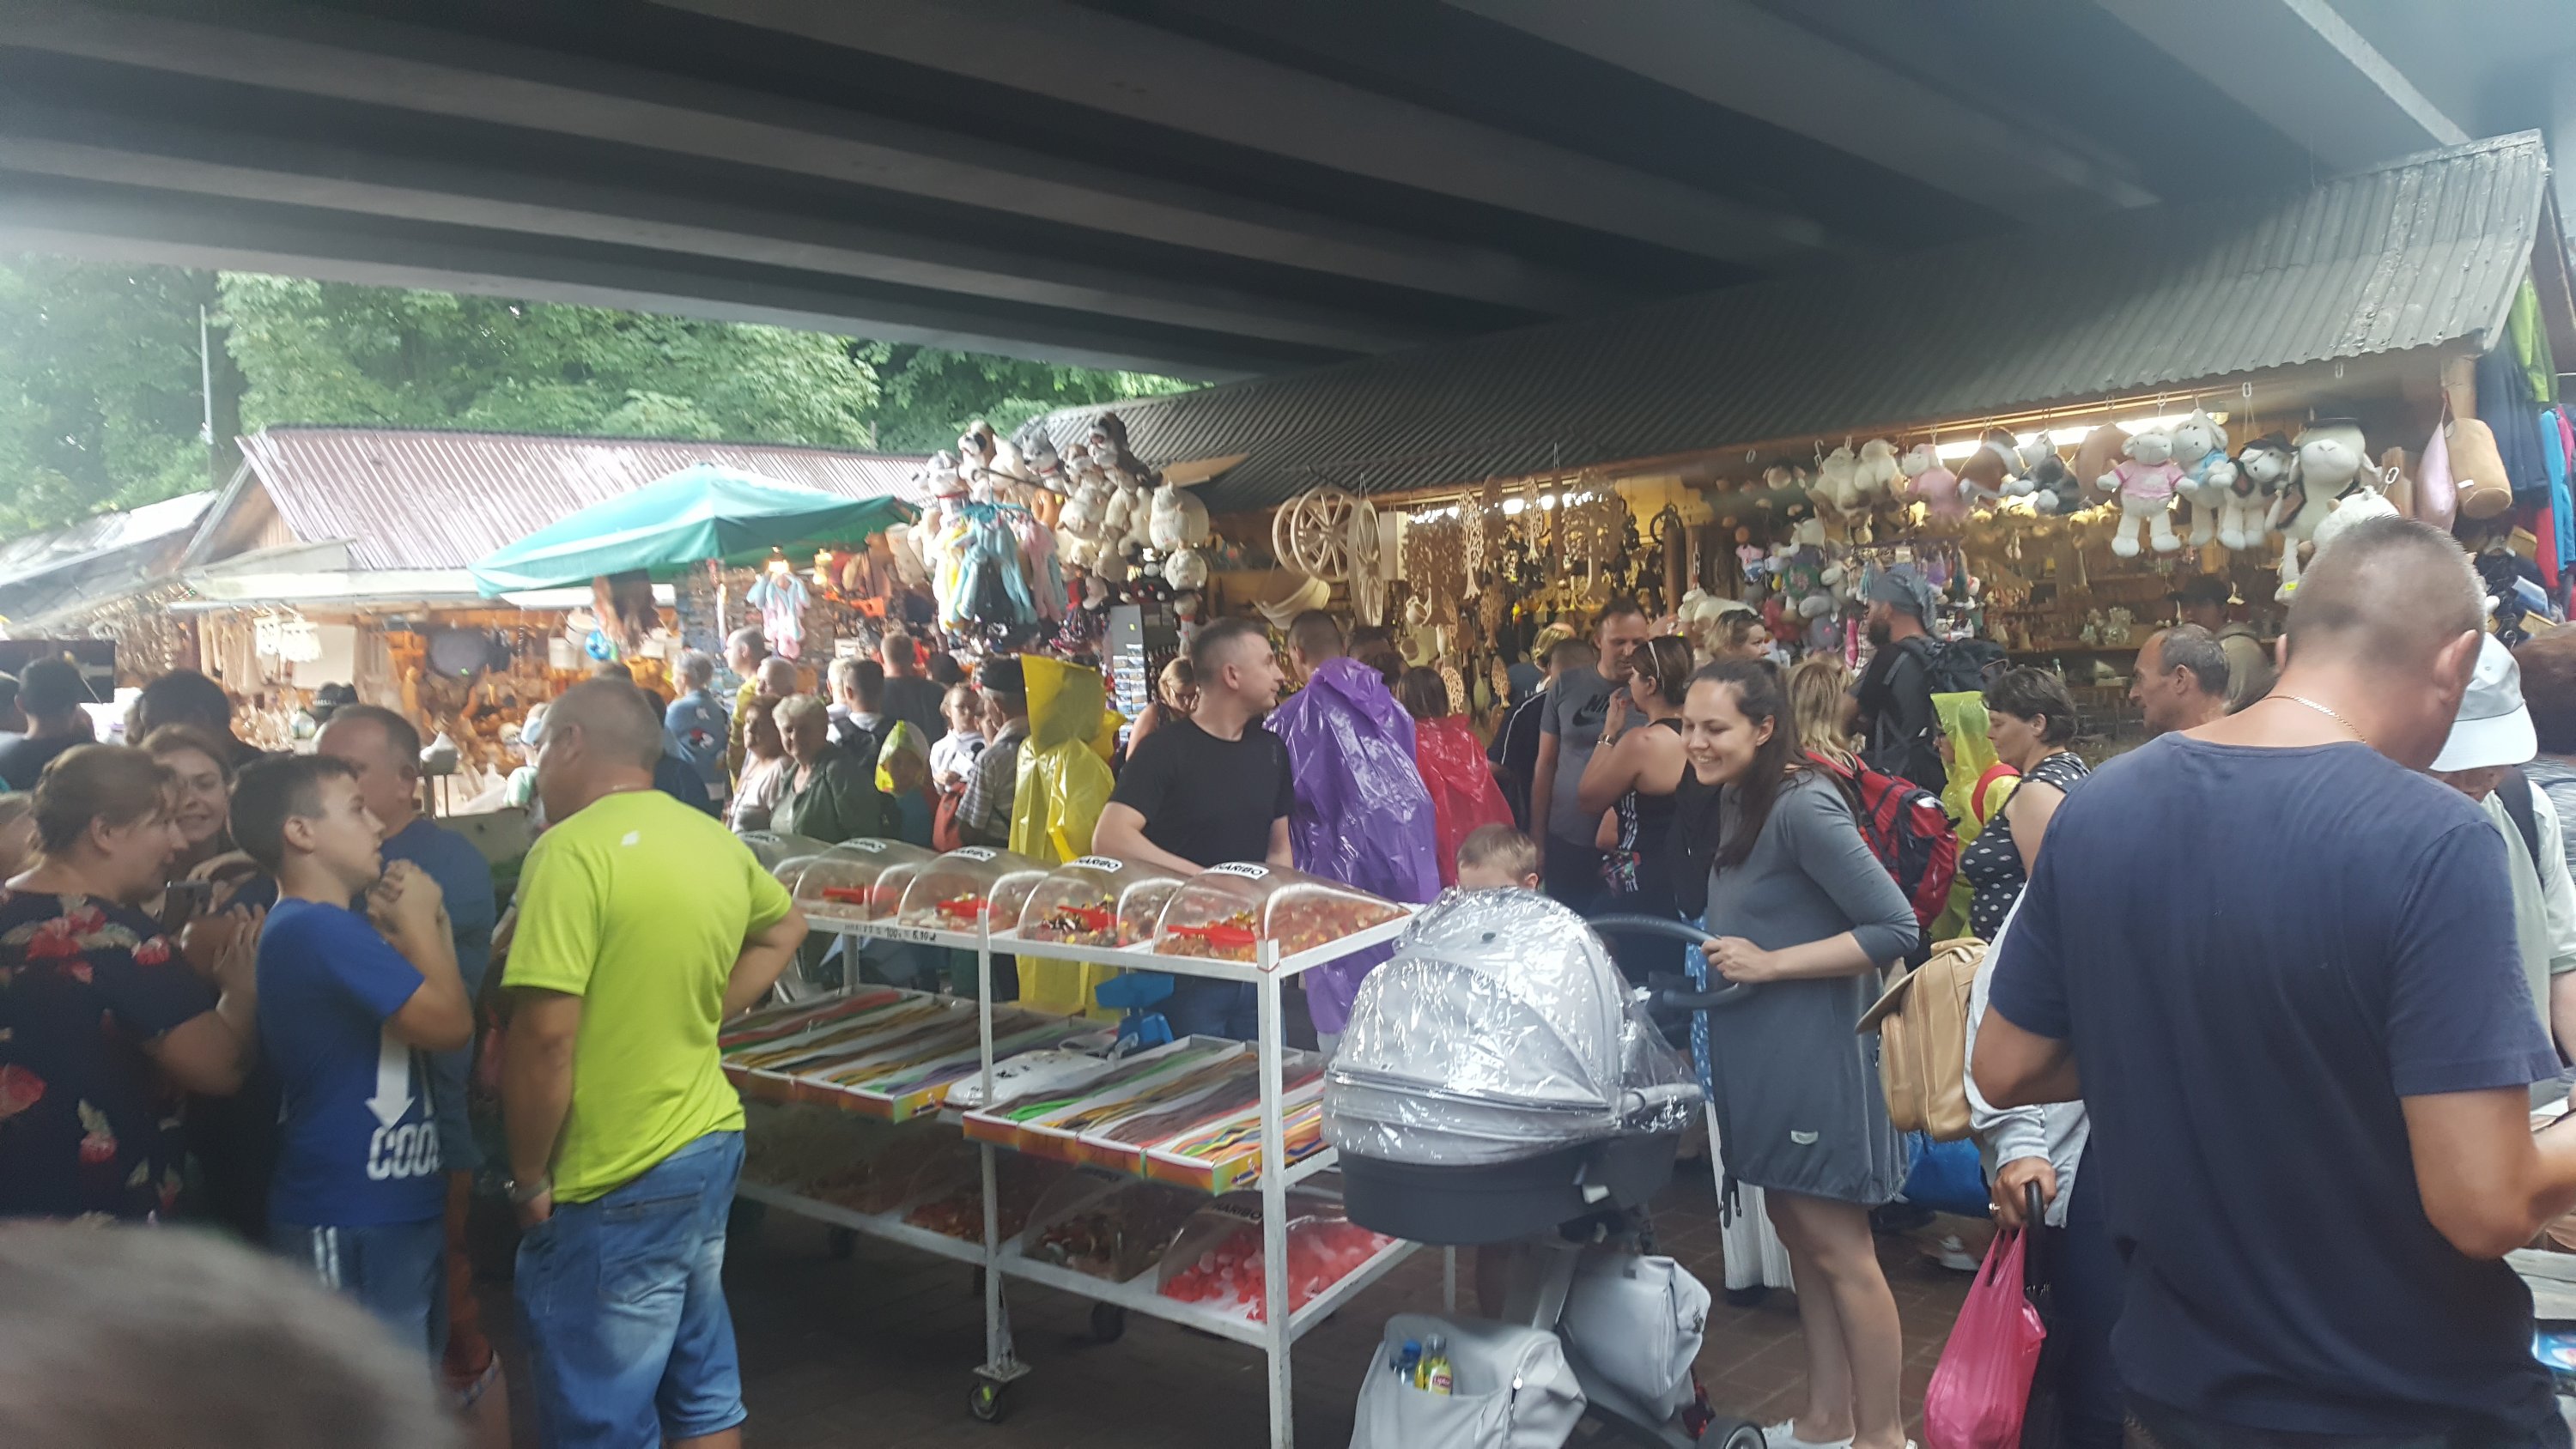 Outdoor market in Poland.